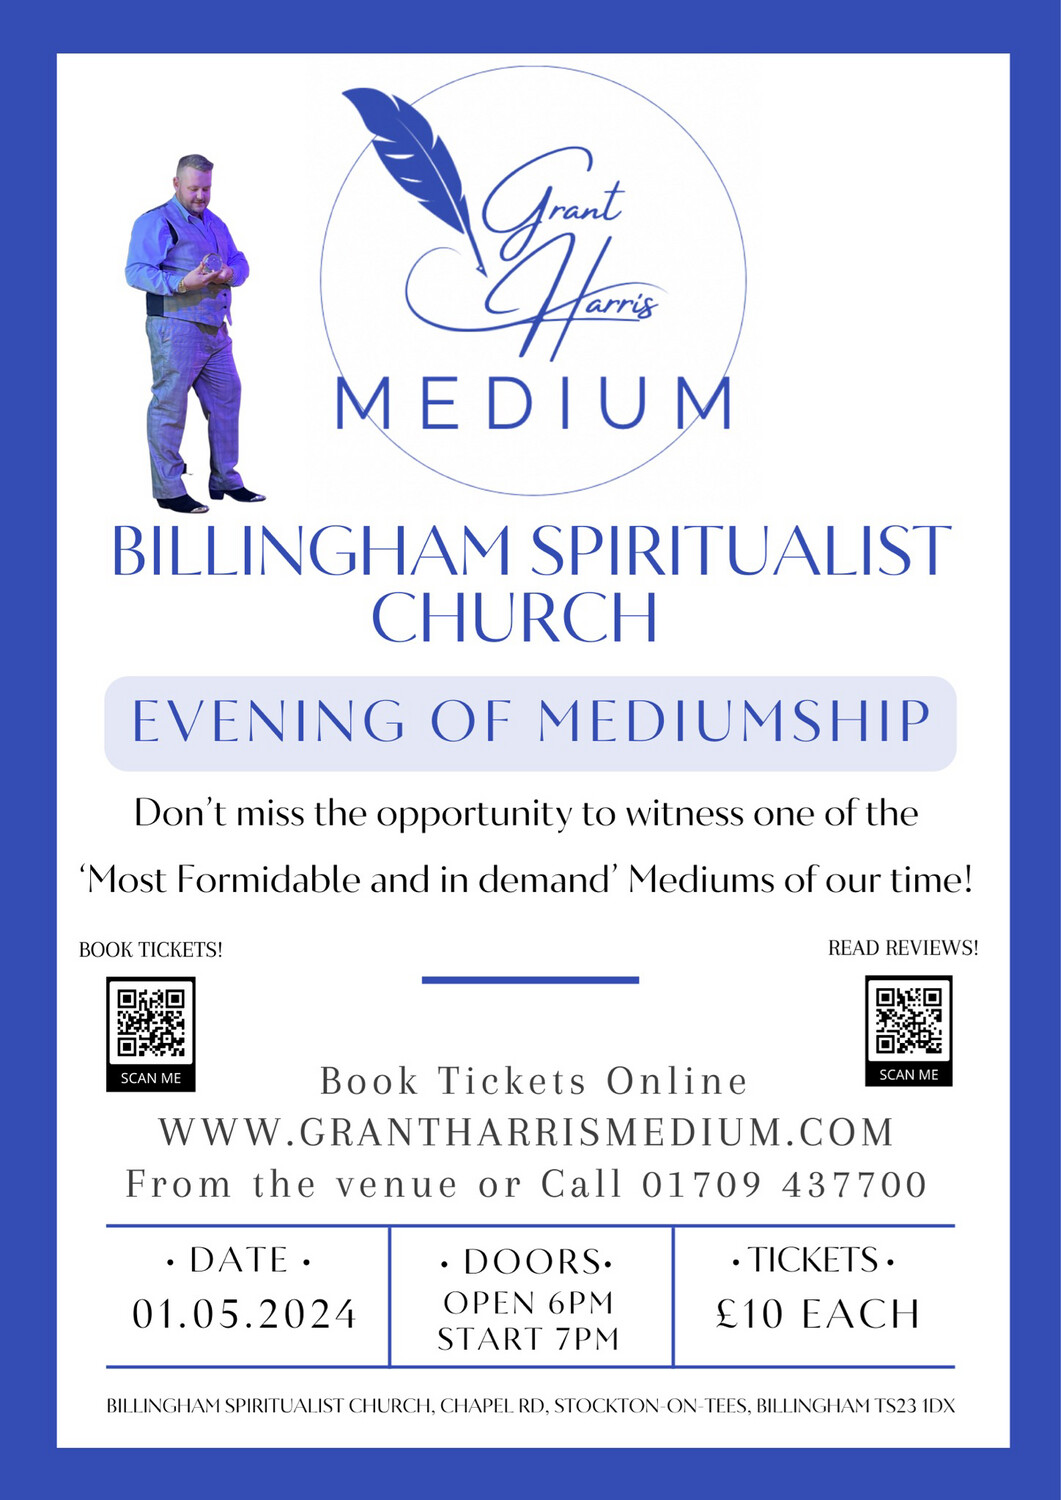 Evening of Mediumship | Billingham Spiritualist Church, Stockton-on-Tees, Wed 1st May 2024